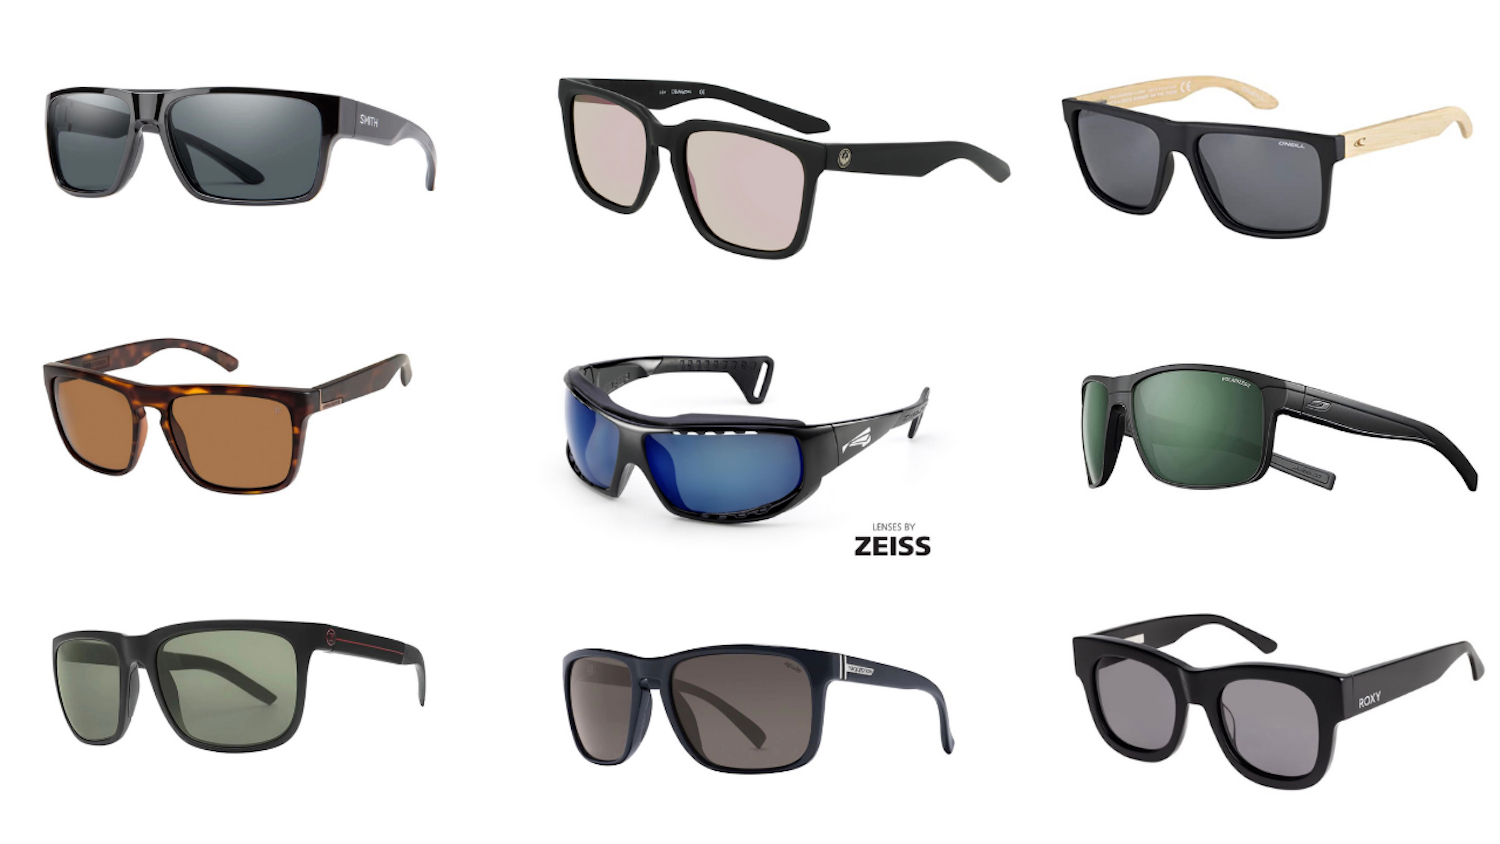 https://surfd.com/wp-content/uploads/2021/12/best-sunglasses-for-surfers.jpg